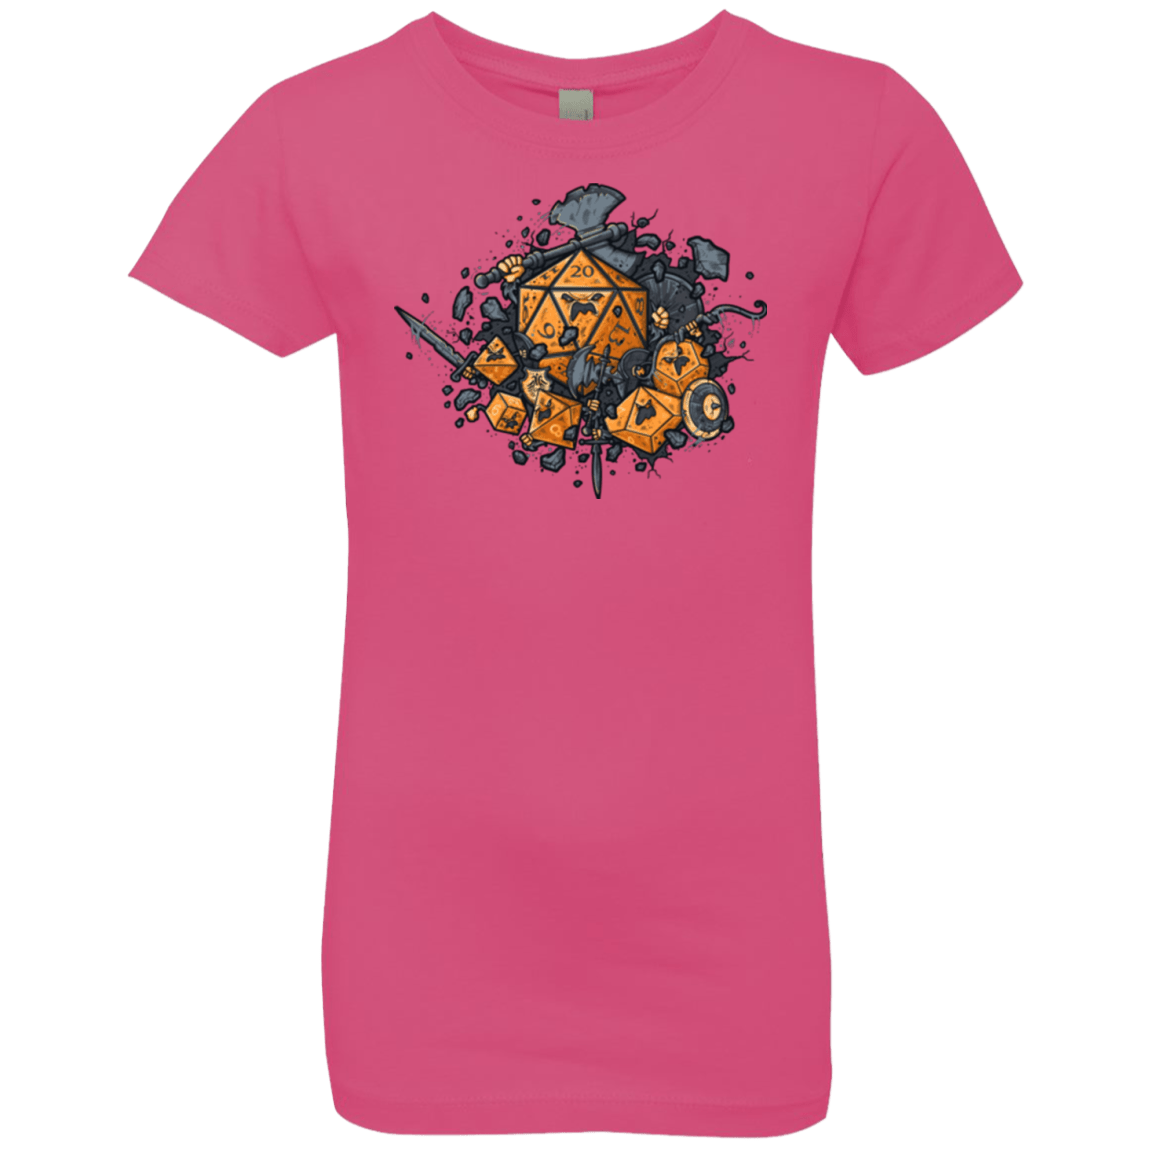 T-Shirts Hot Pink / YXS RPG UNITED Girls Premium T-Shirt